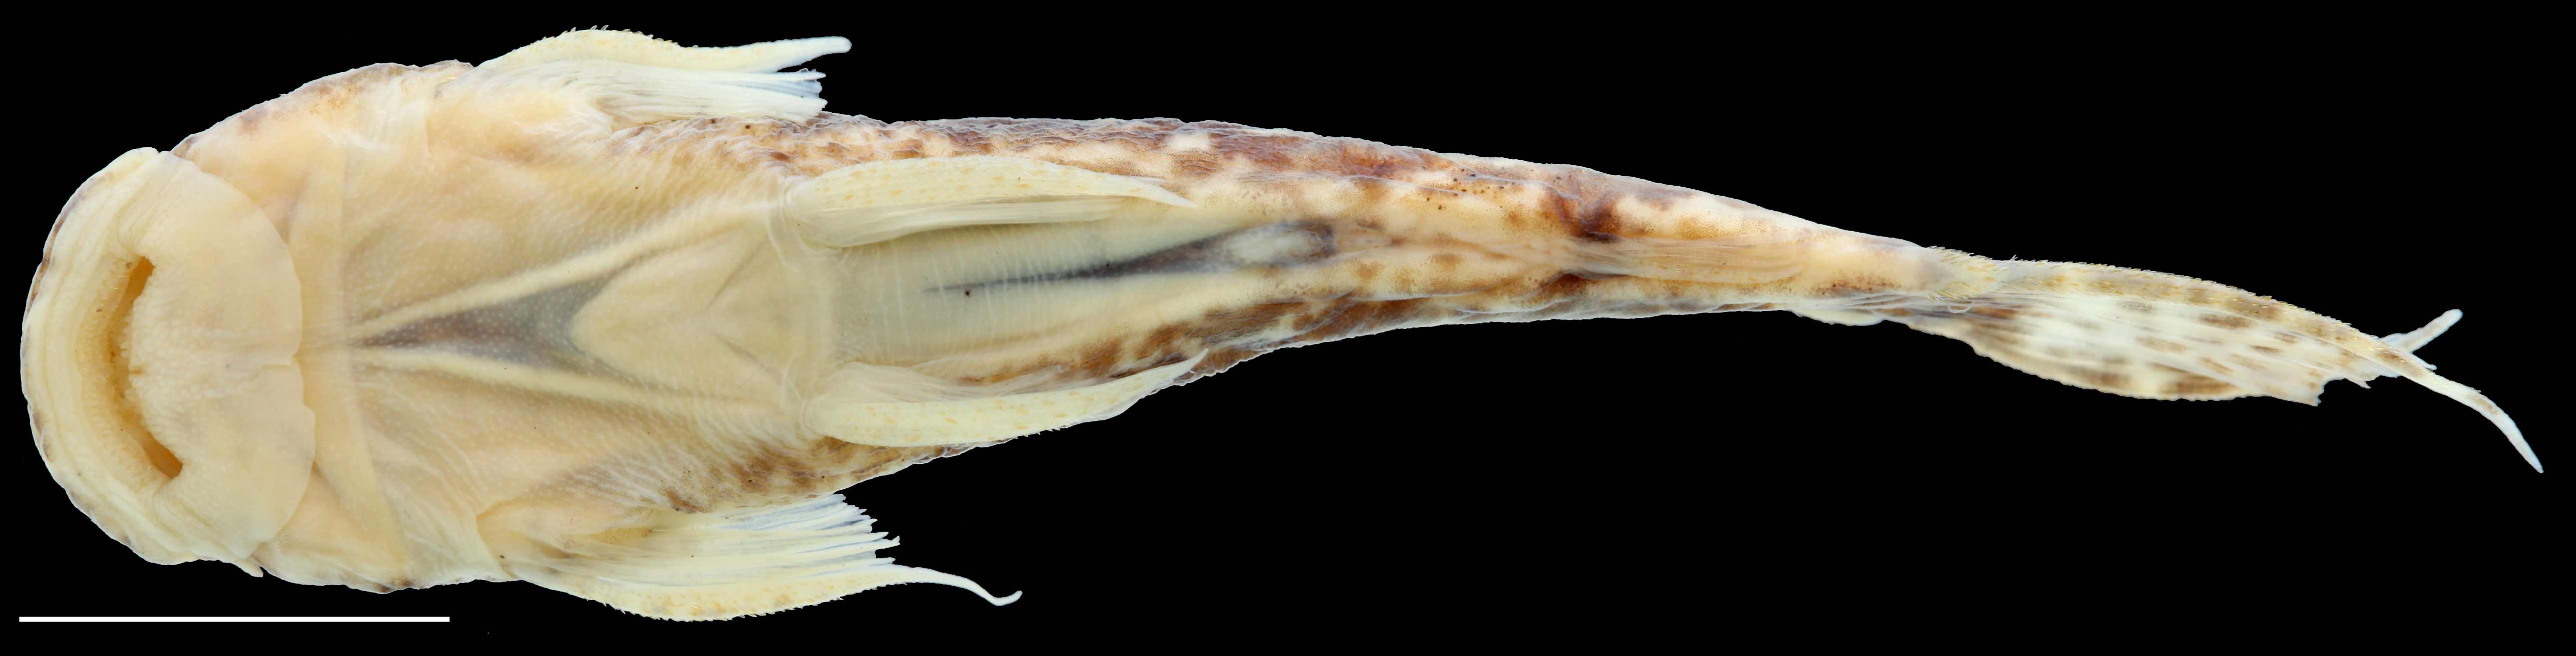 Paratype of <em>Astroblepus putumayoensis</em>, IAvH-P-12708_Ventral, 43.6 mm SL (scale bar = 1 cm). Photograph by C. DoNascimiento